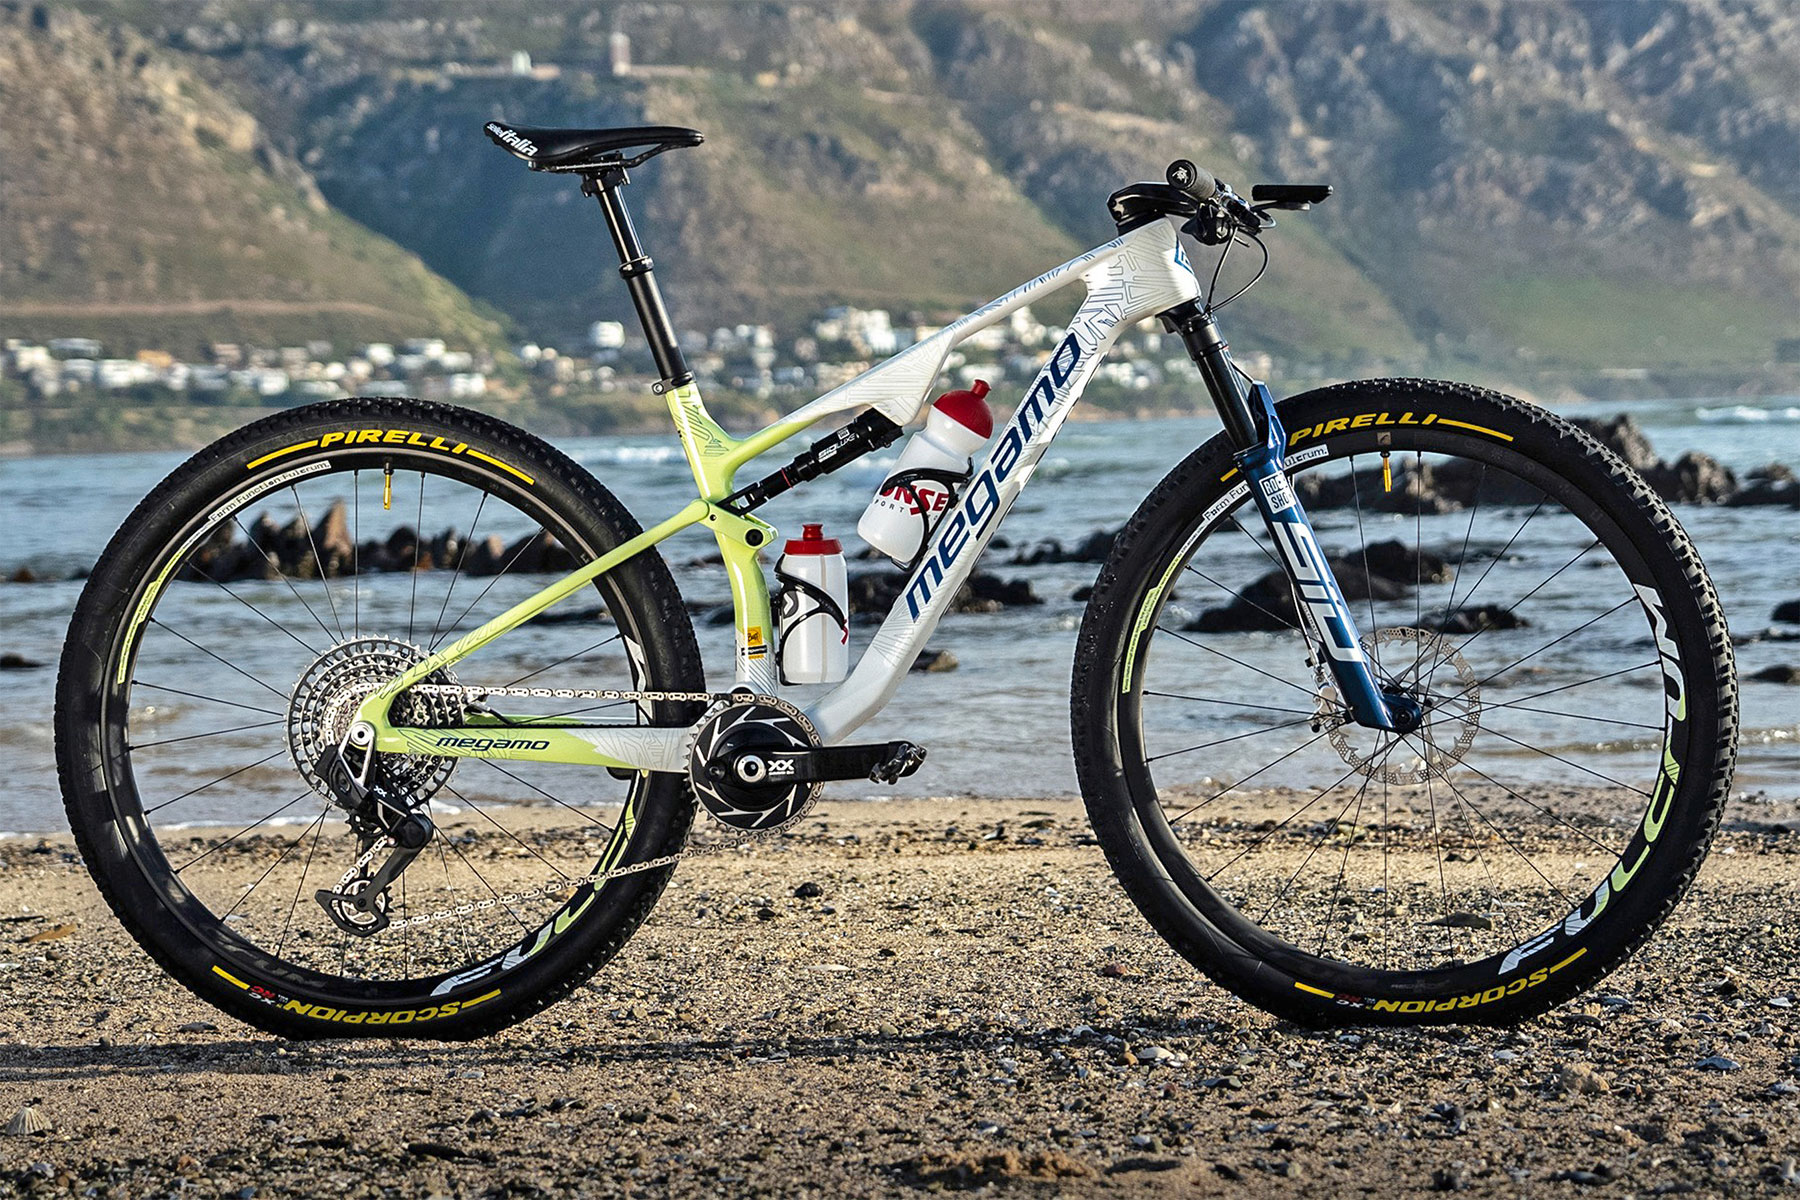 Buy Buff’s Megamo Track, Stage 1-Winning 120mm Limited Edition Cape Epic XC Bike